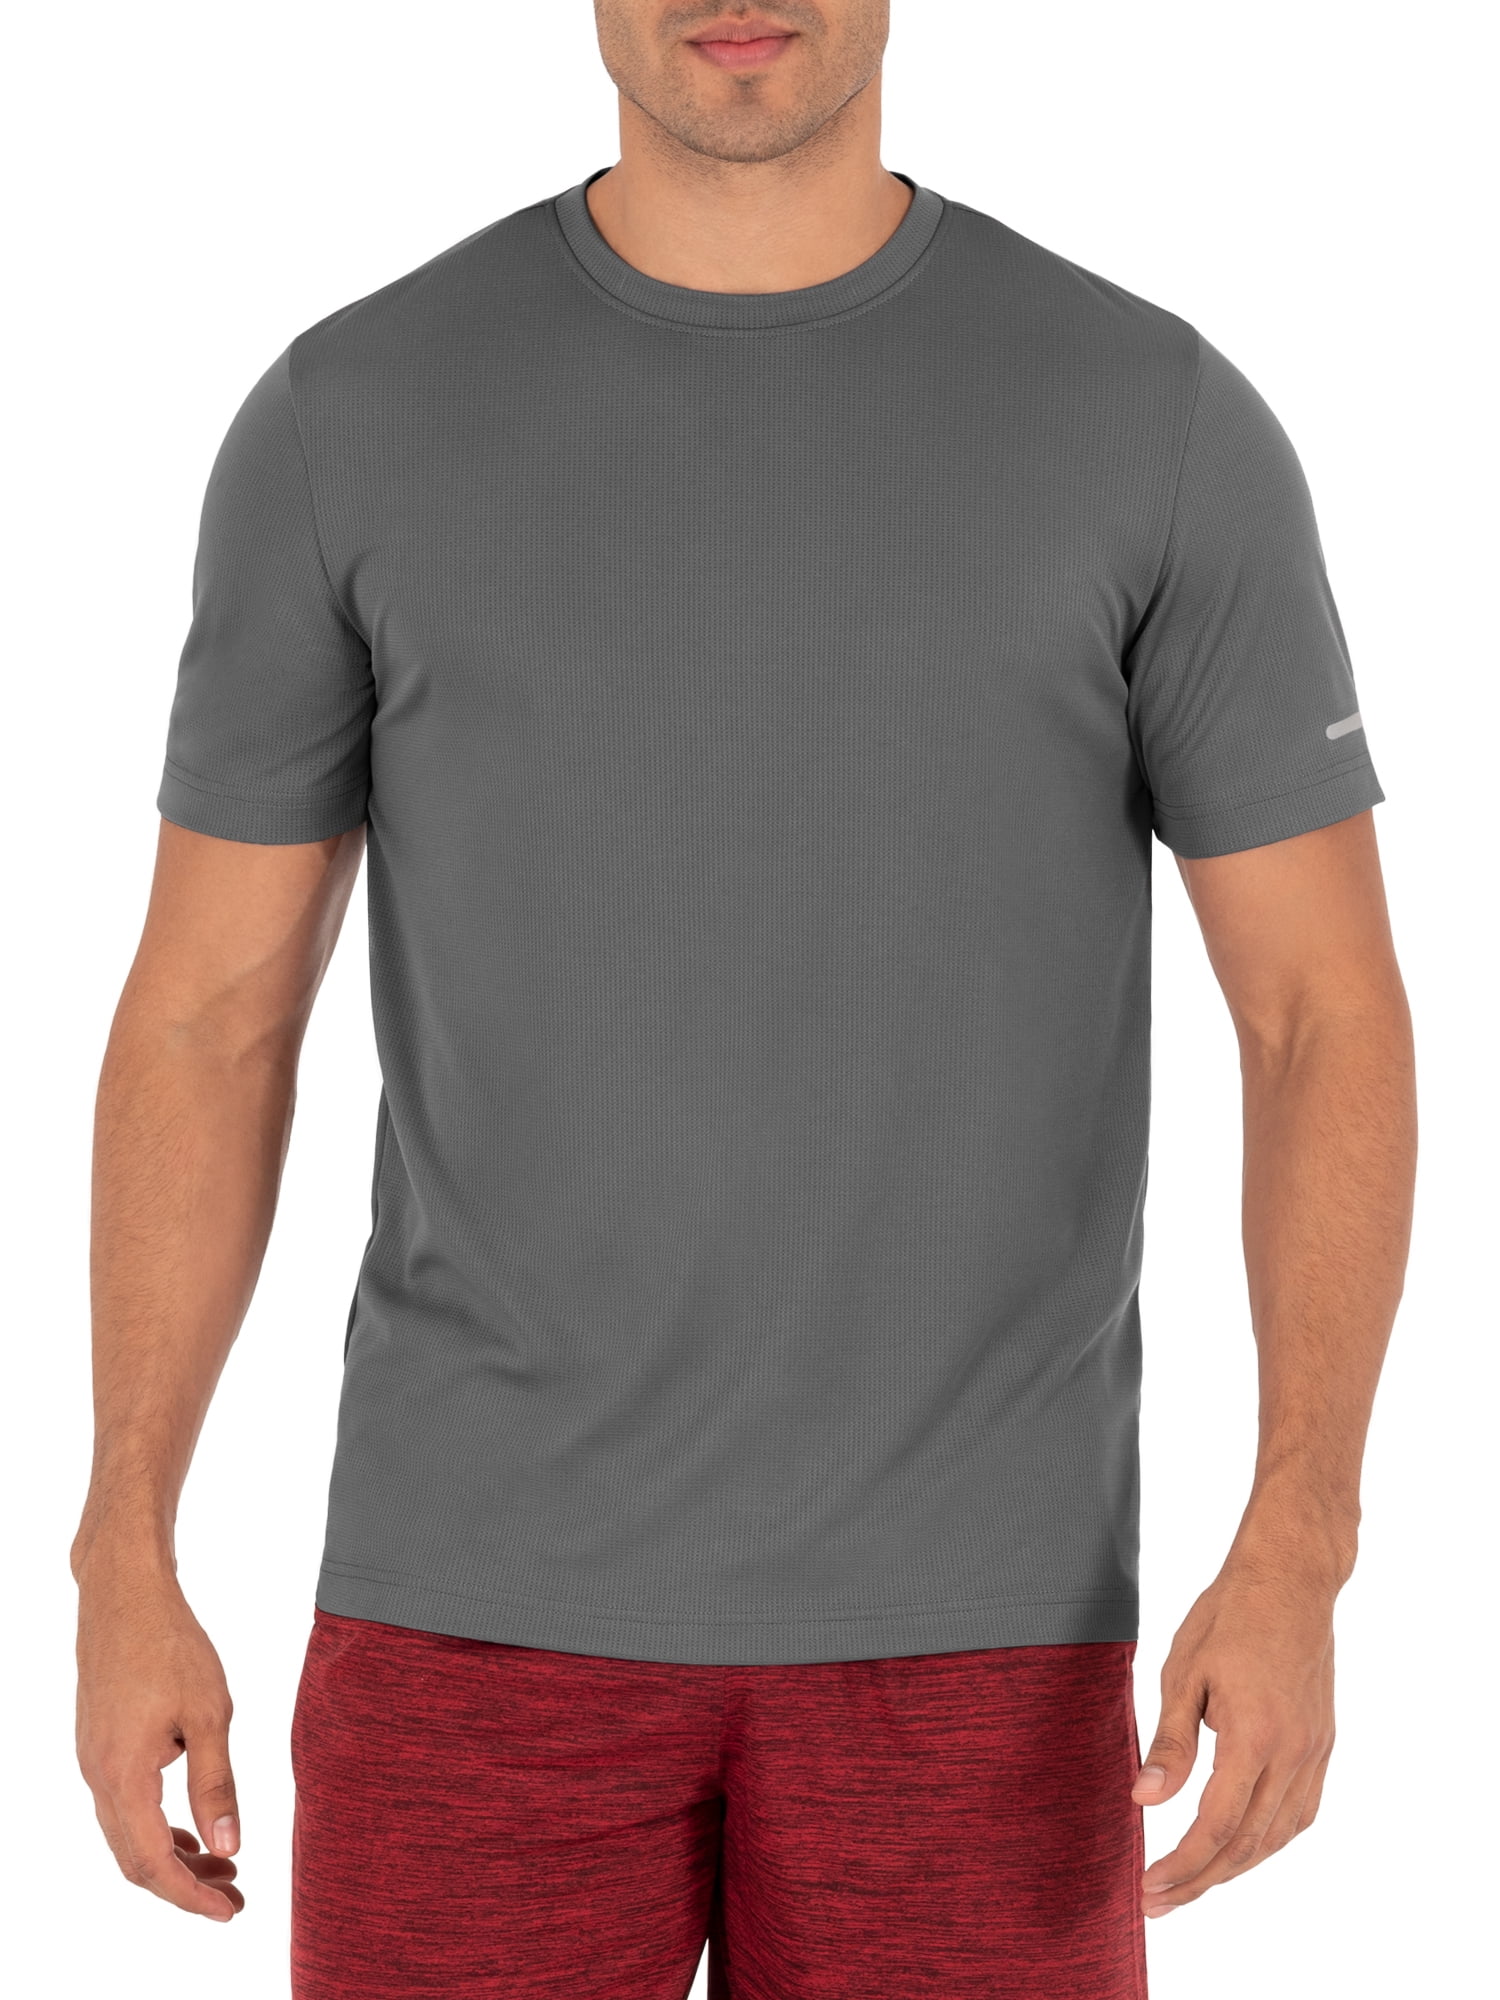 Buy Wear Ease Compression T Shirt form